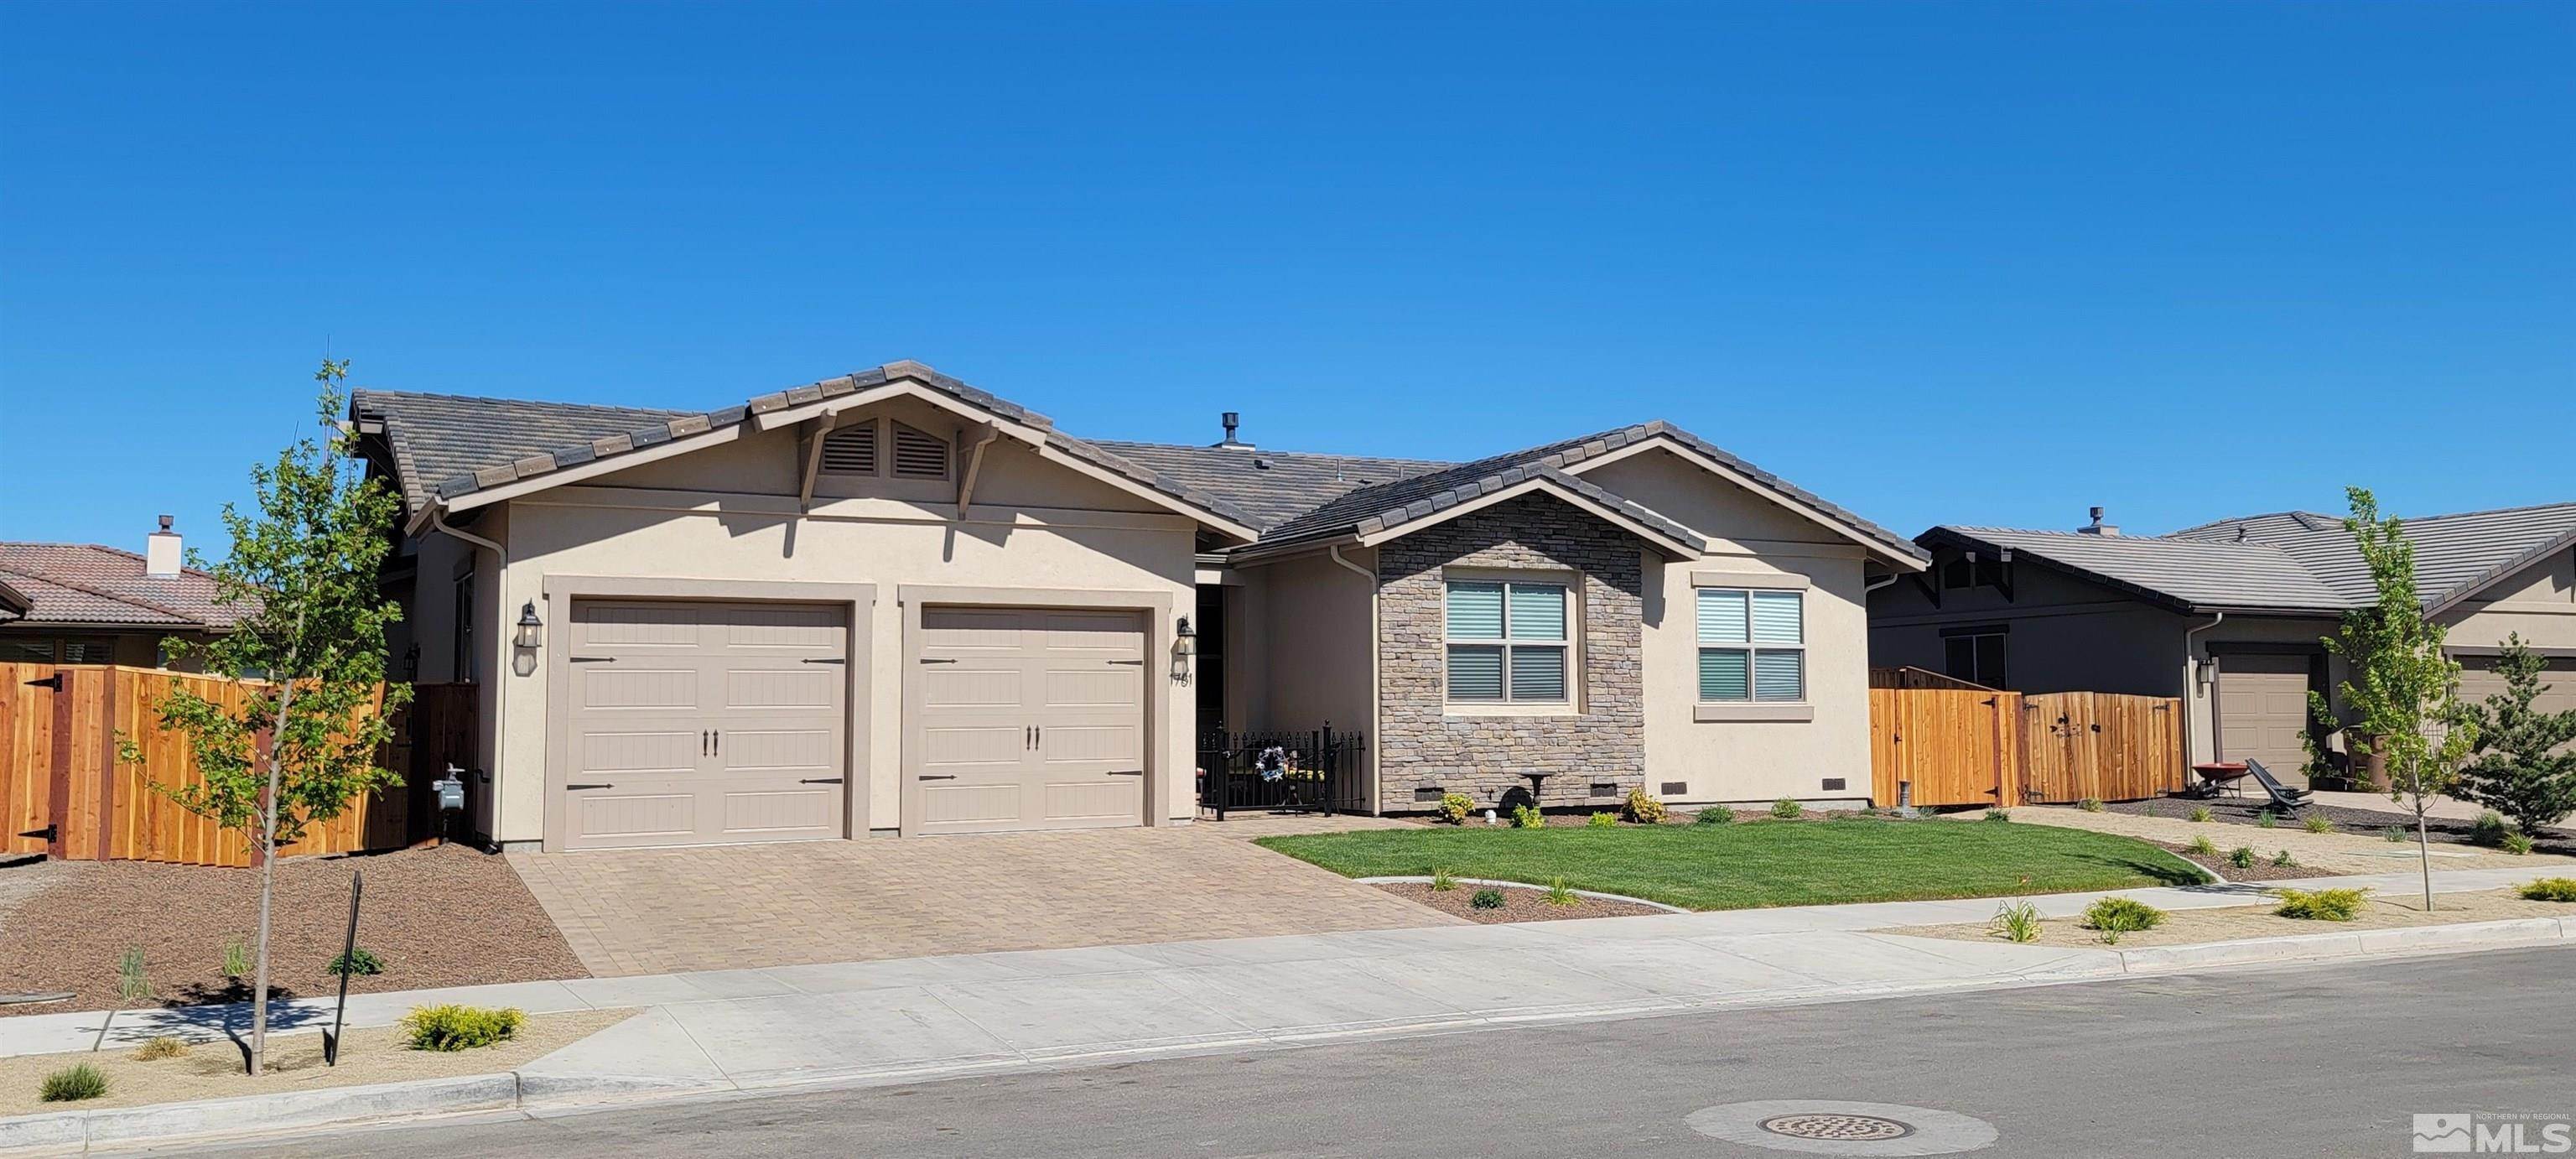 Single Family Homes for Active at 1787 La Cita Way Lot # 29 Minden, Nevada 89423 United States